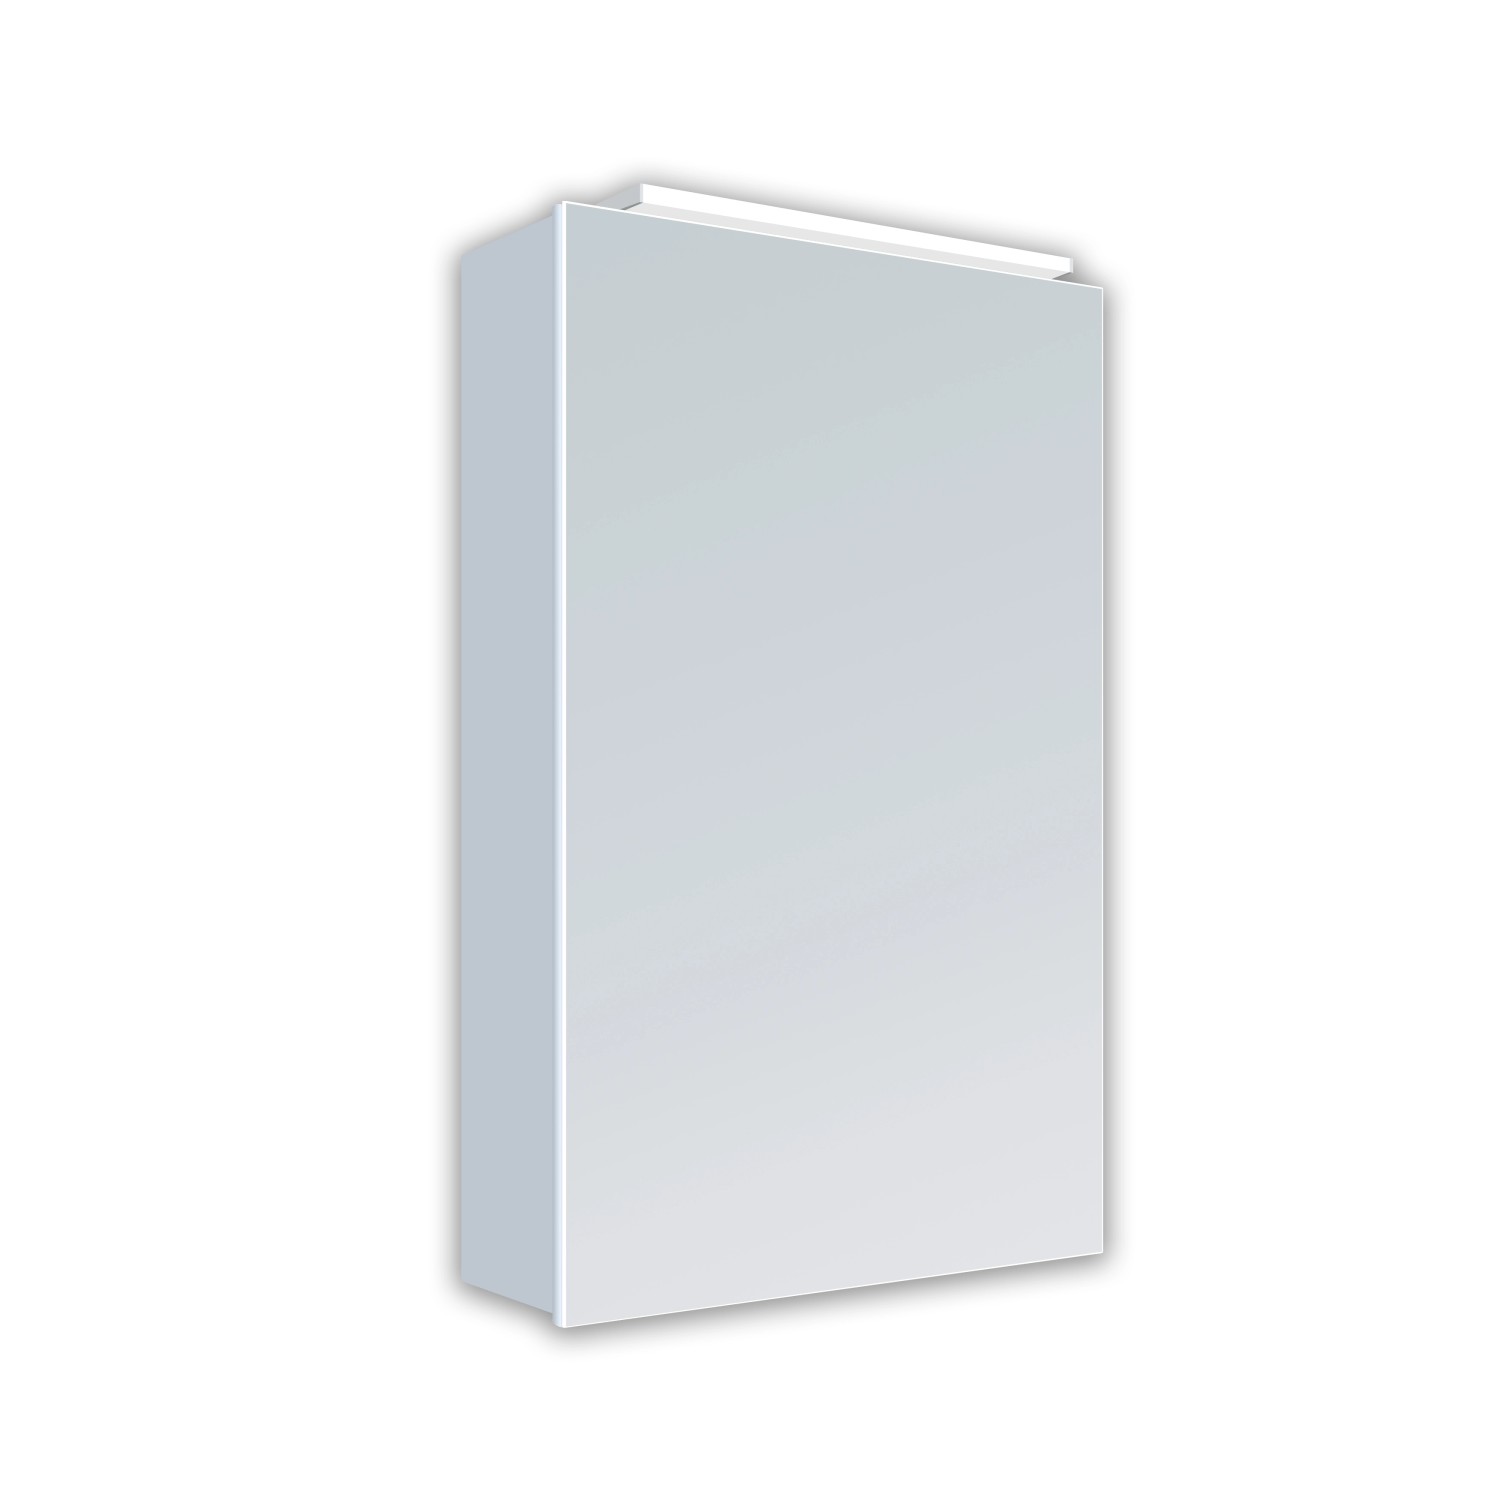 DSK Spiegelschrank Aluminio Vegas Alufarben 40 cm kaufen bei OBI